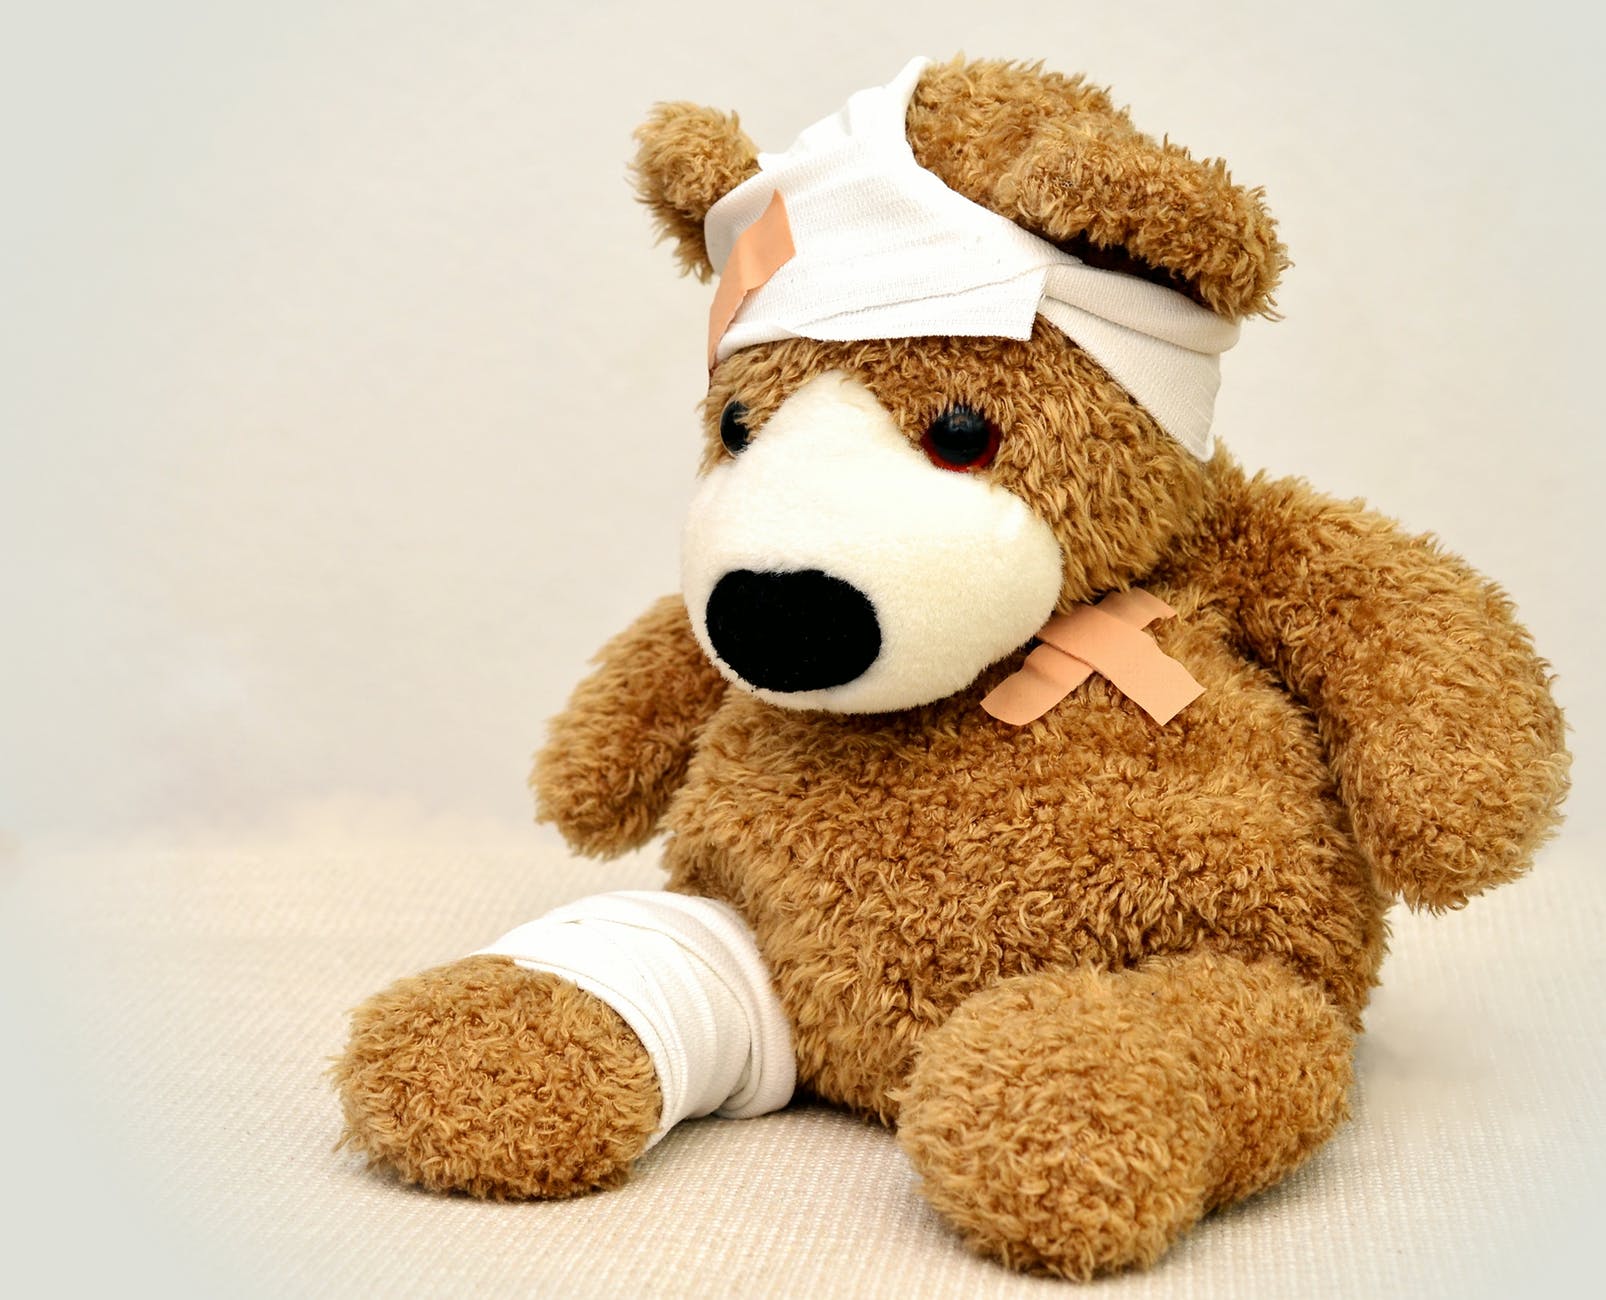 Injured bear after falling down